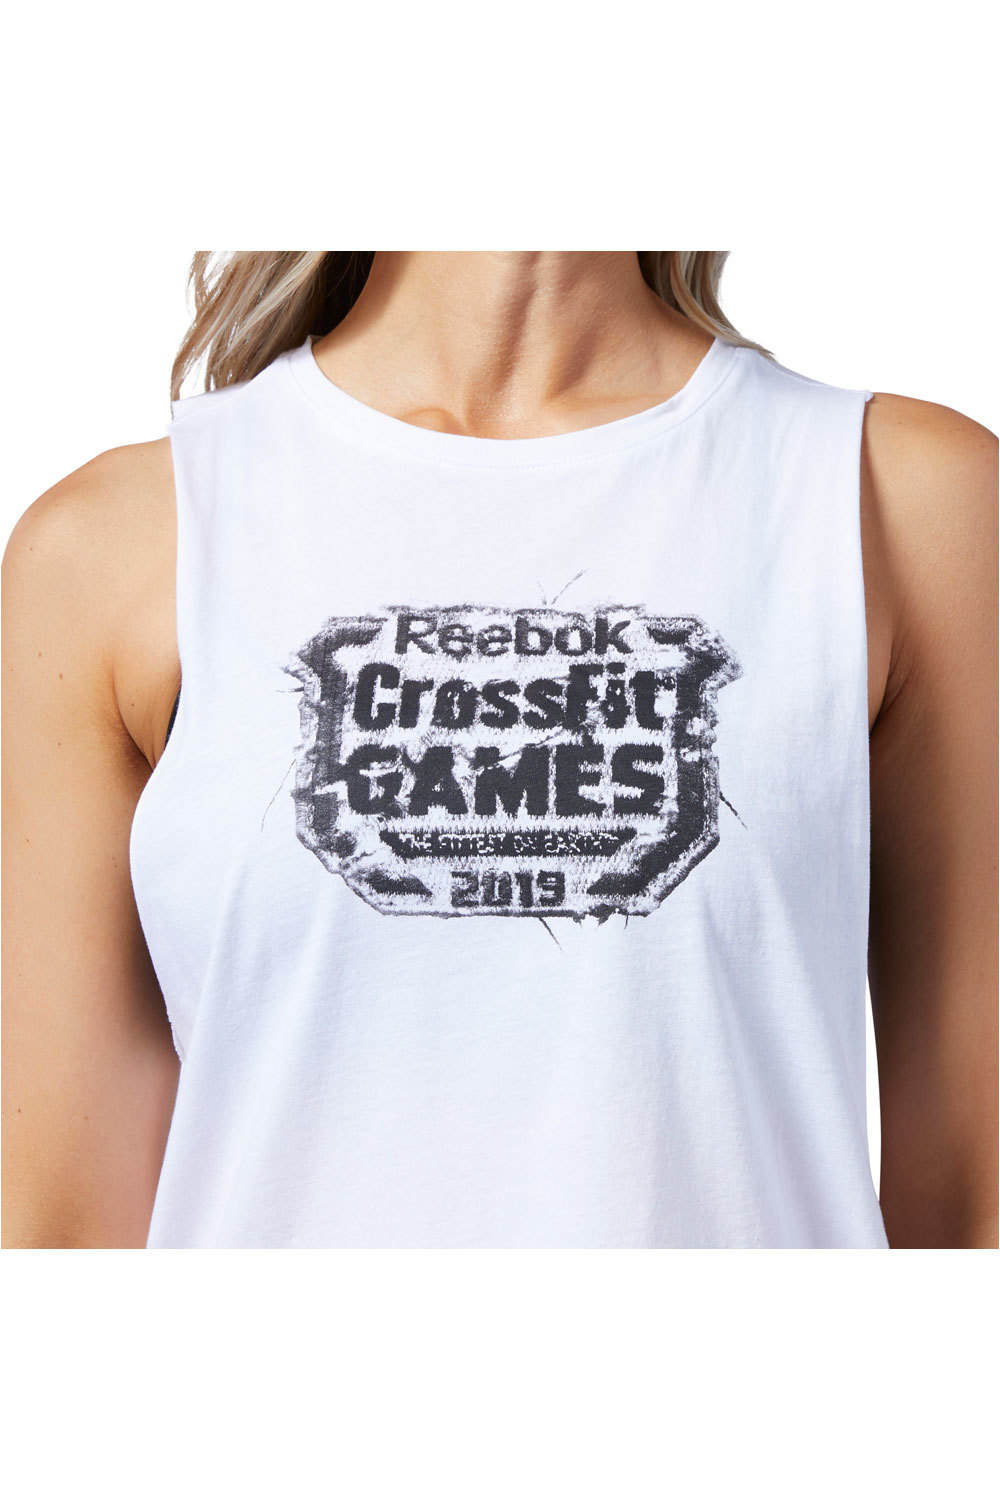 Reebok camiseta tirantes fitness mujer RC Distressed Games Crest vista detalle